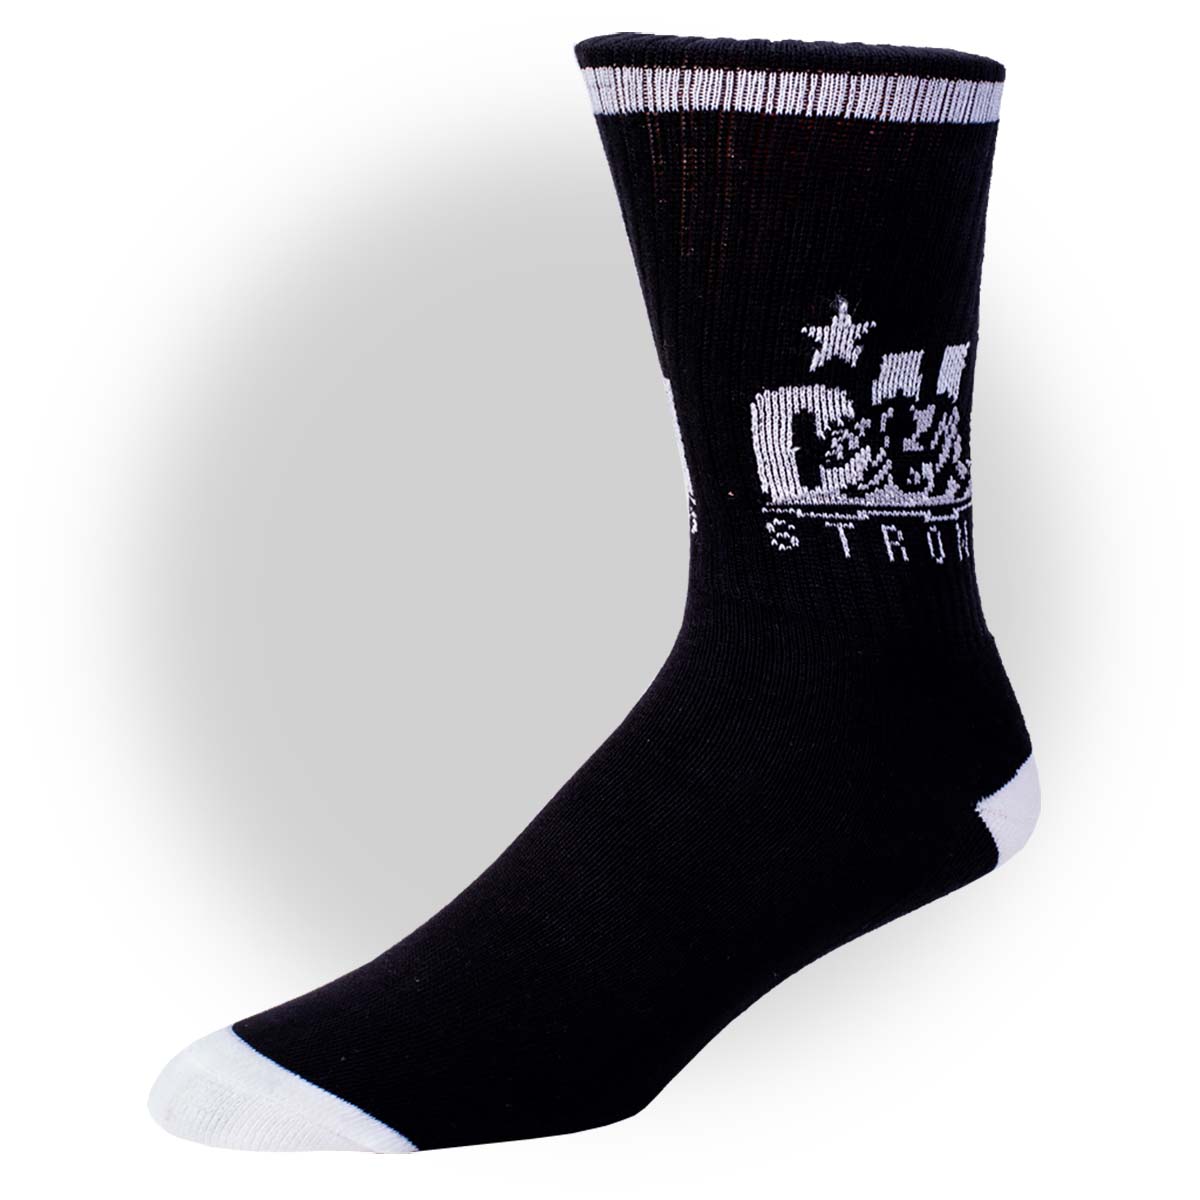 CALI Strong Original Athletic Crew Socks Glow in the Dark - Socks - Image 1 - CALI Strong